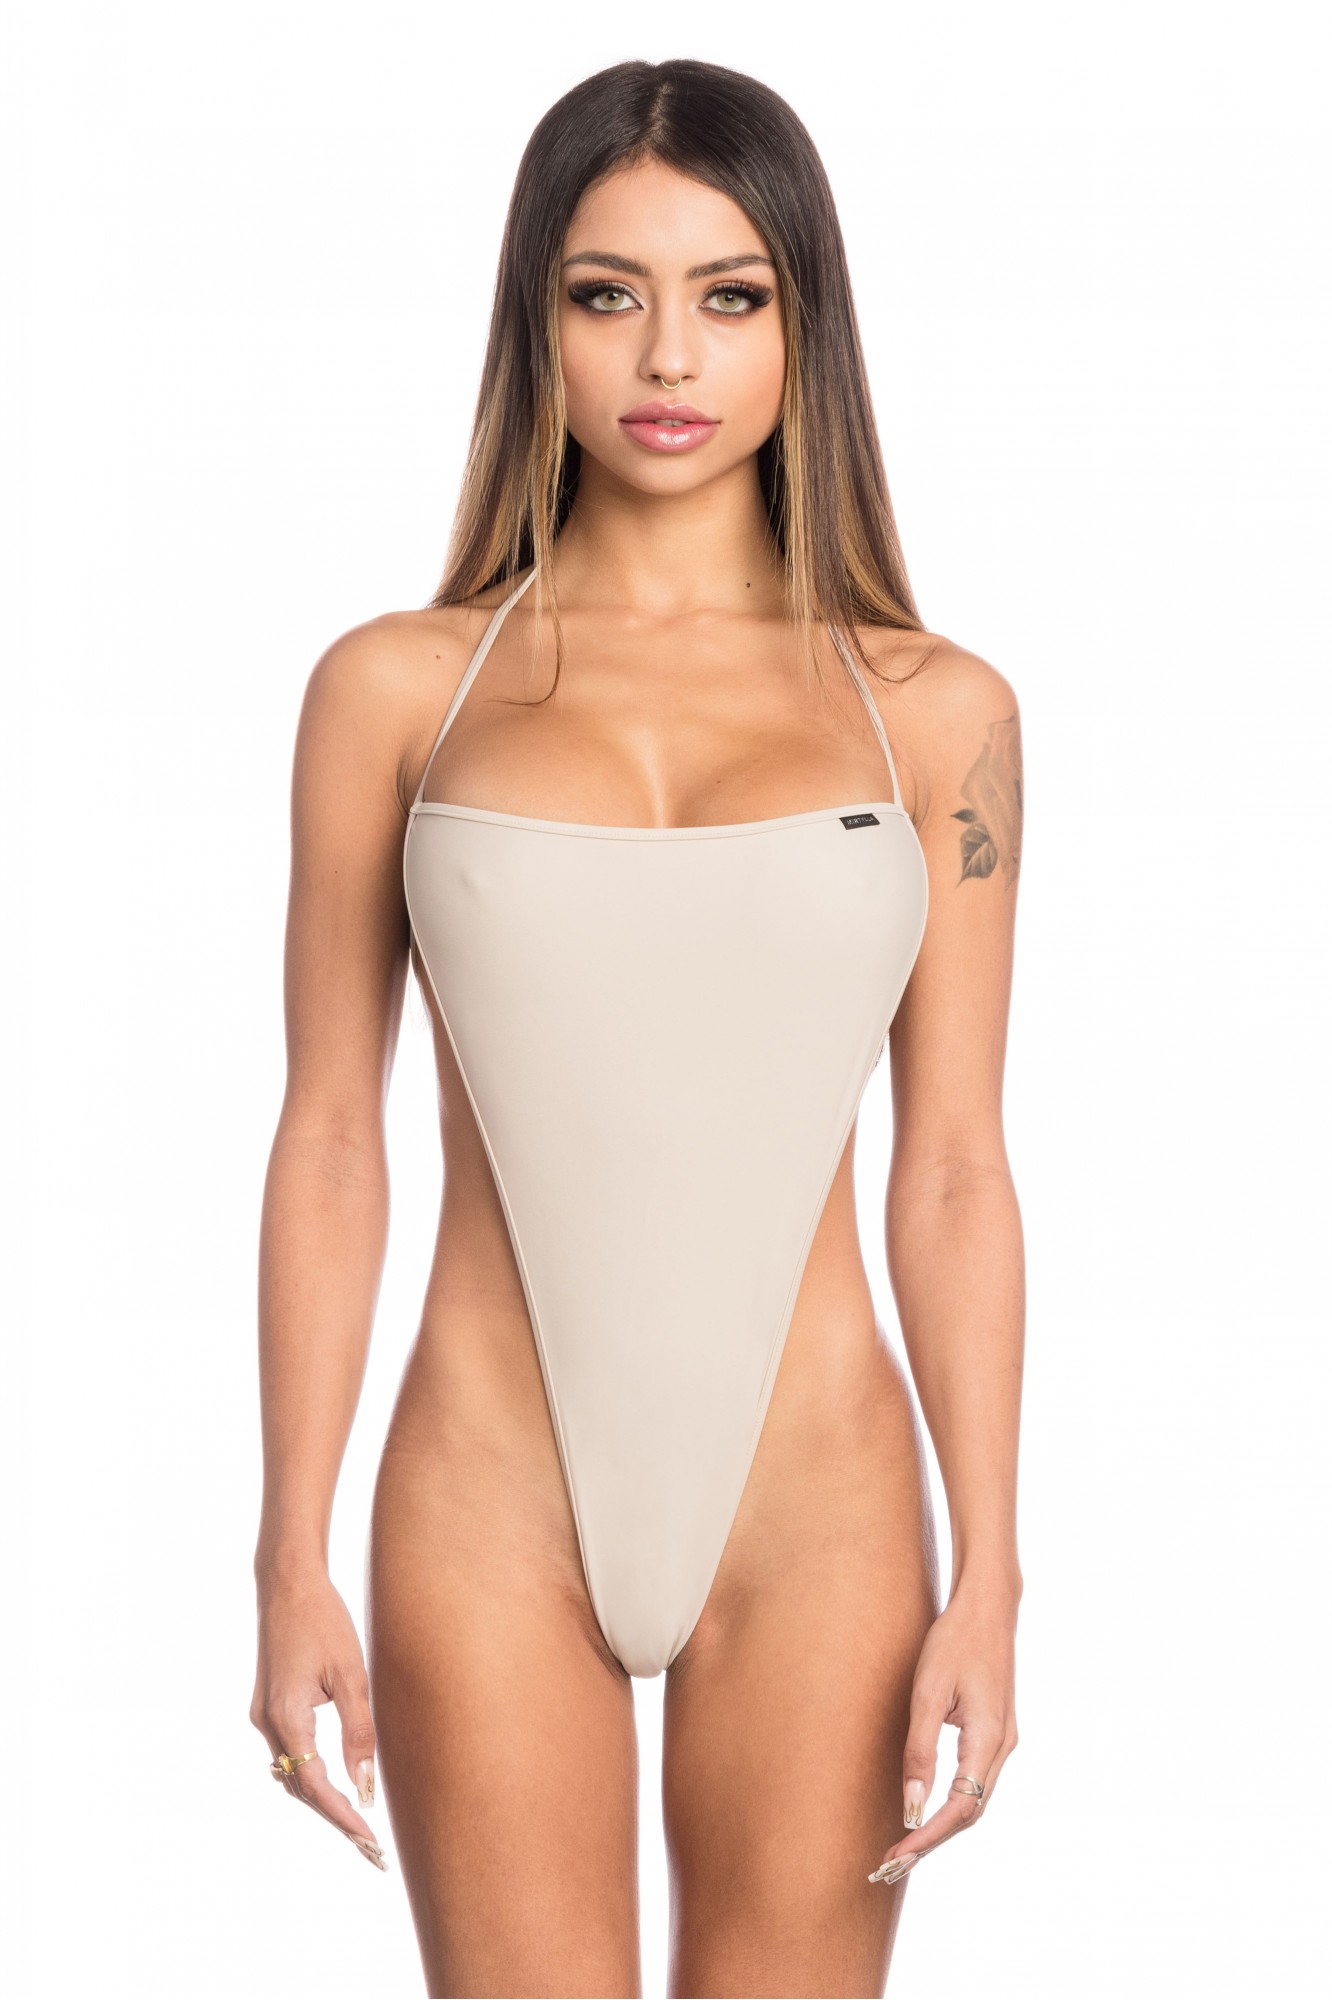 https://www.mirtylla.com/store/6868-big_default/gisele-underwear-set-mirtylla-milano-made-in-italy-shop.jpg